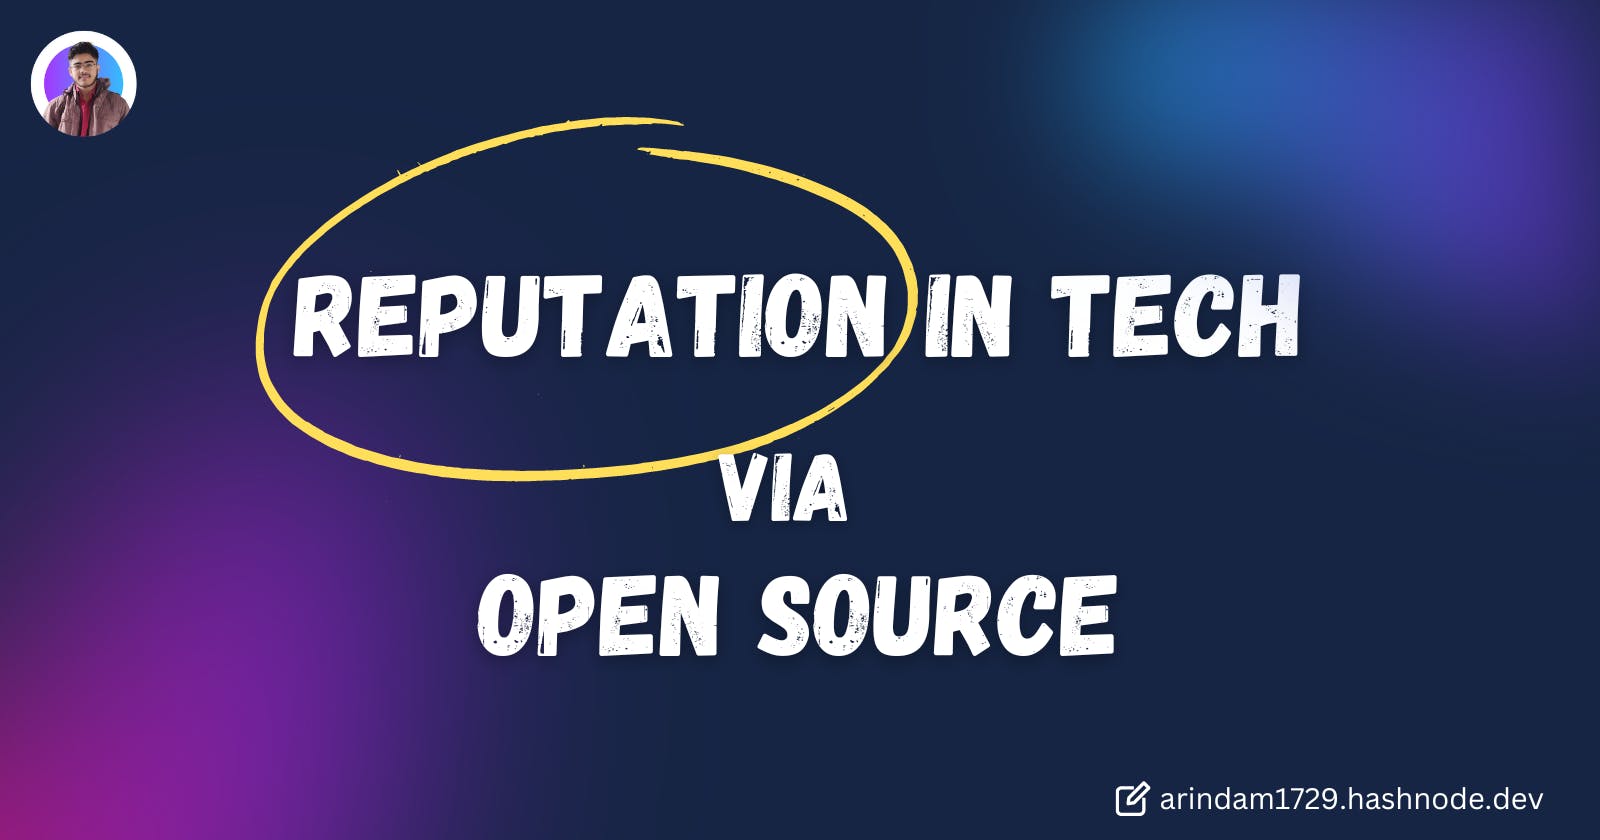 Reputation in Tech via Open Source